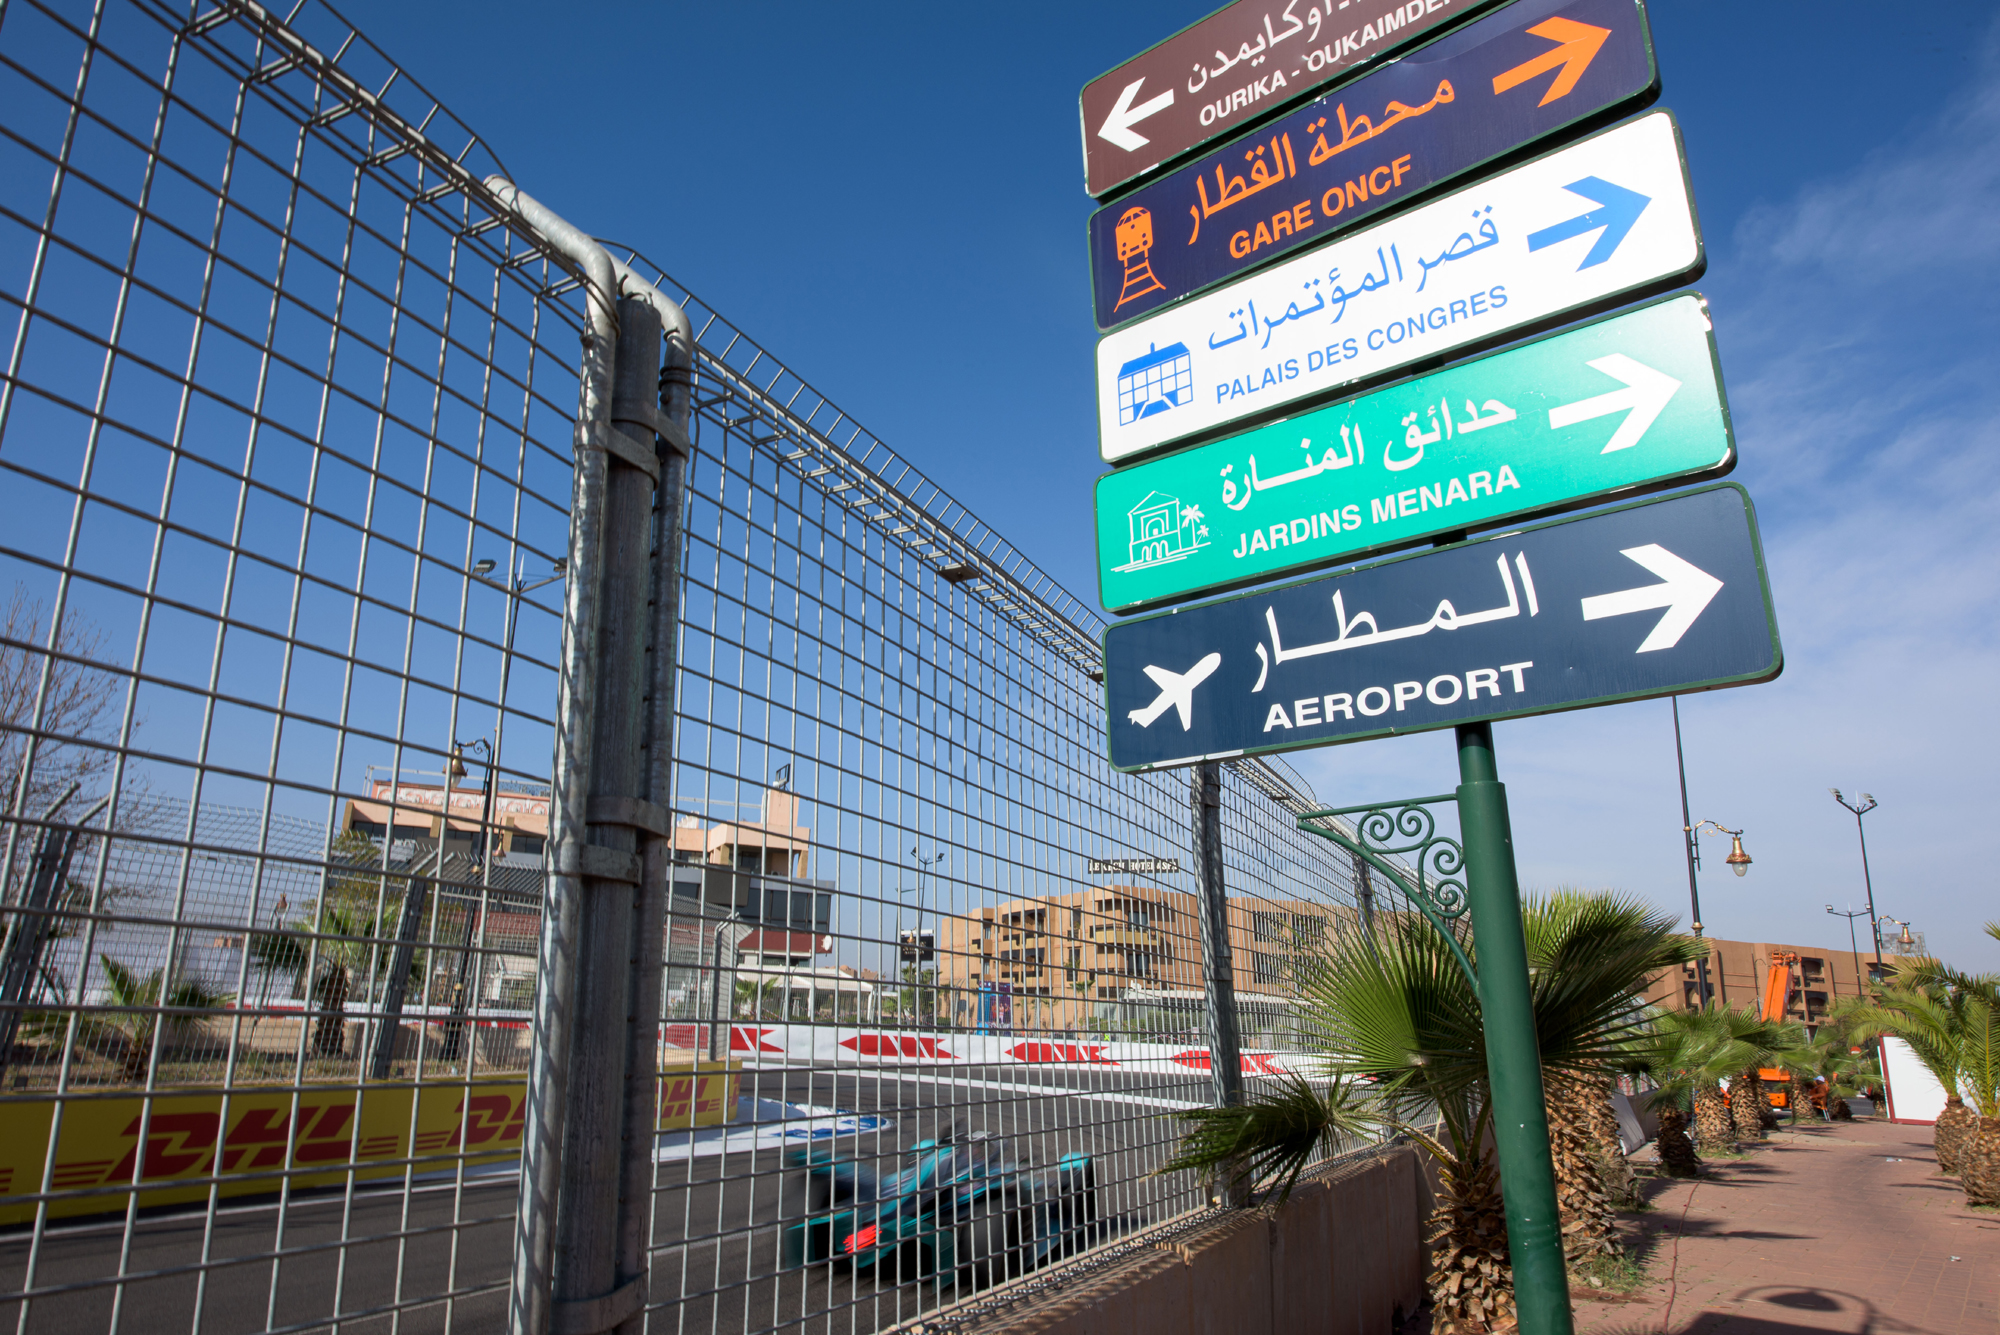 Formula E Marrakesh E Prix 2020